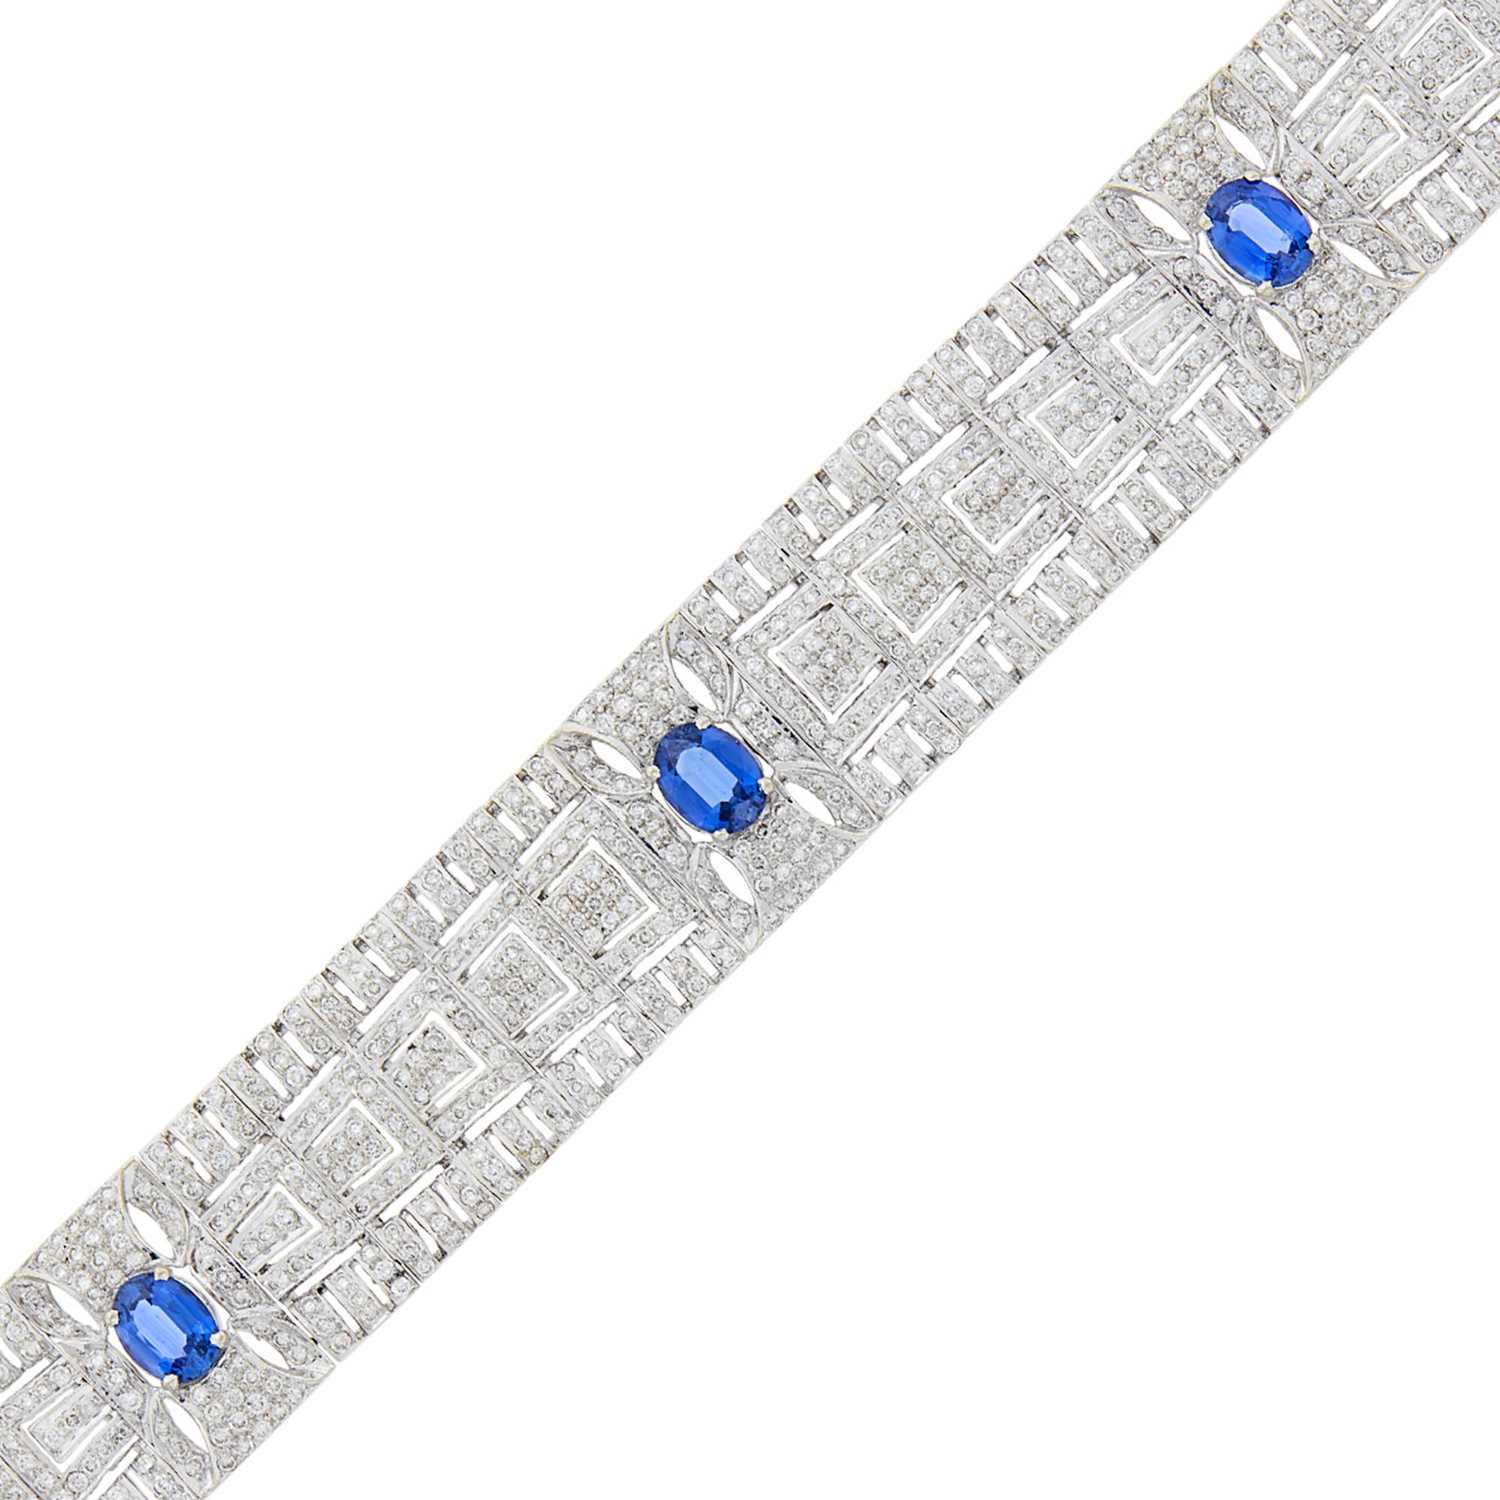 Lot 65 - White Gold, Sapphire and Diamond Bracelet